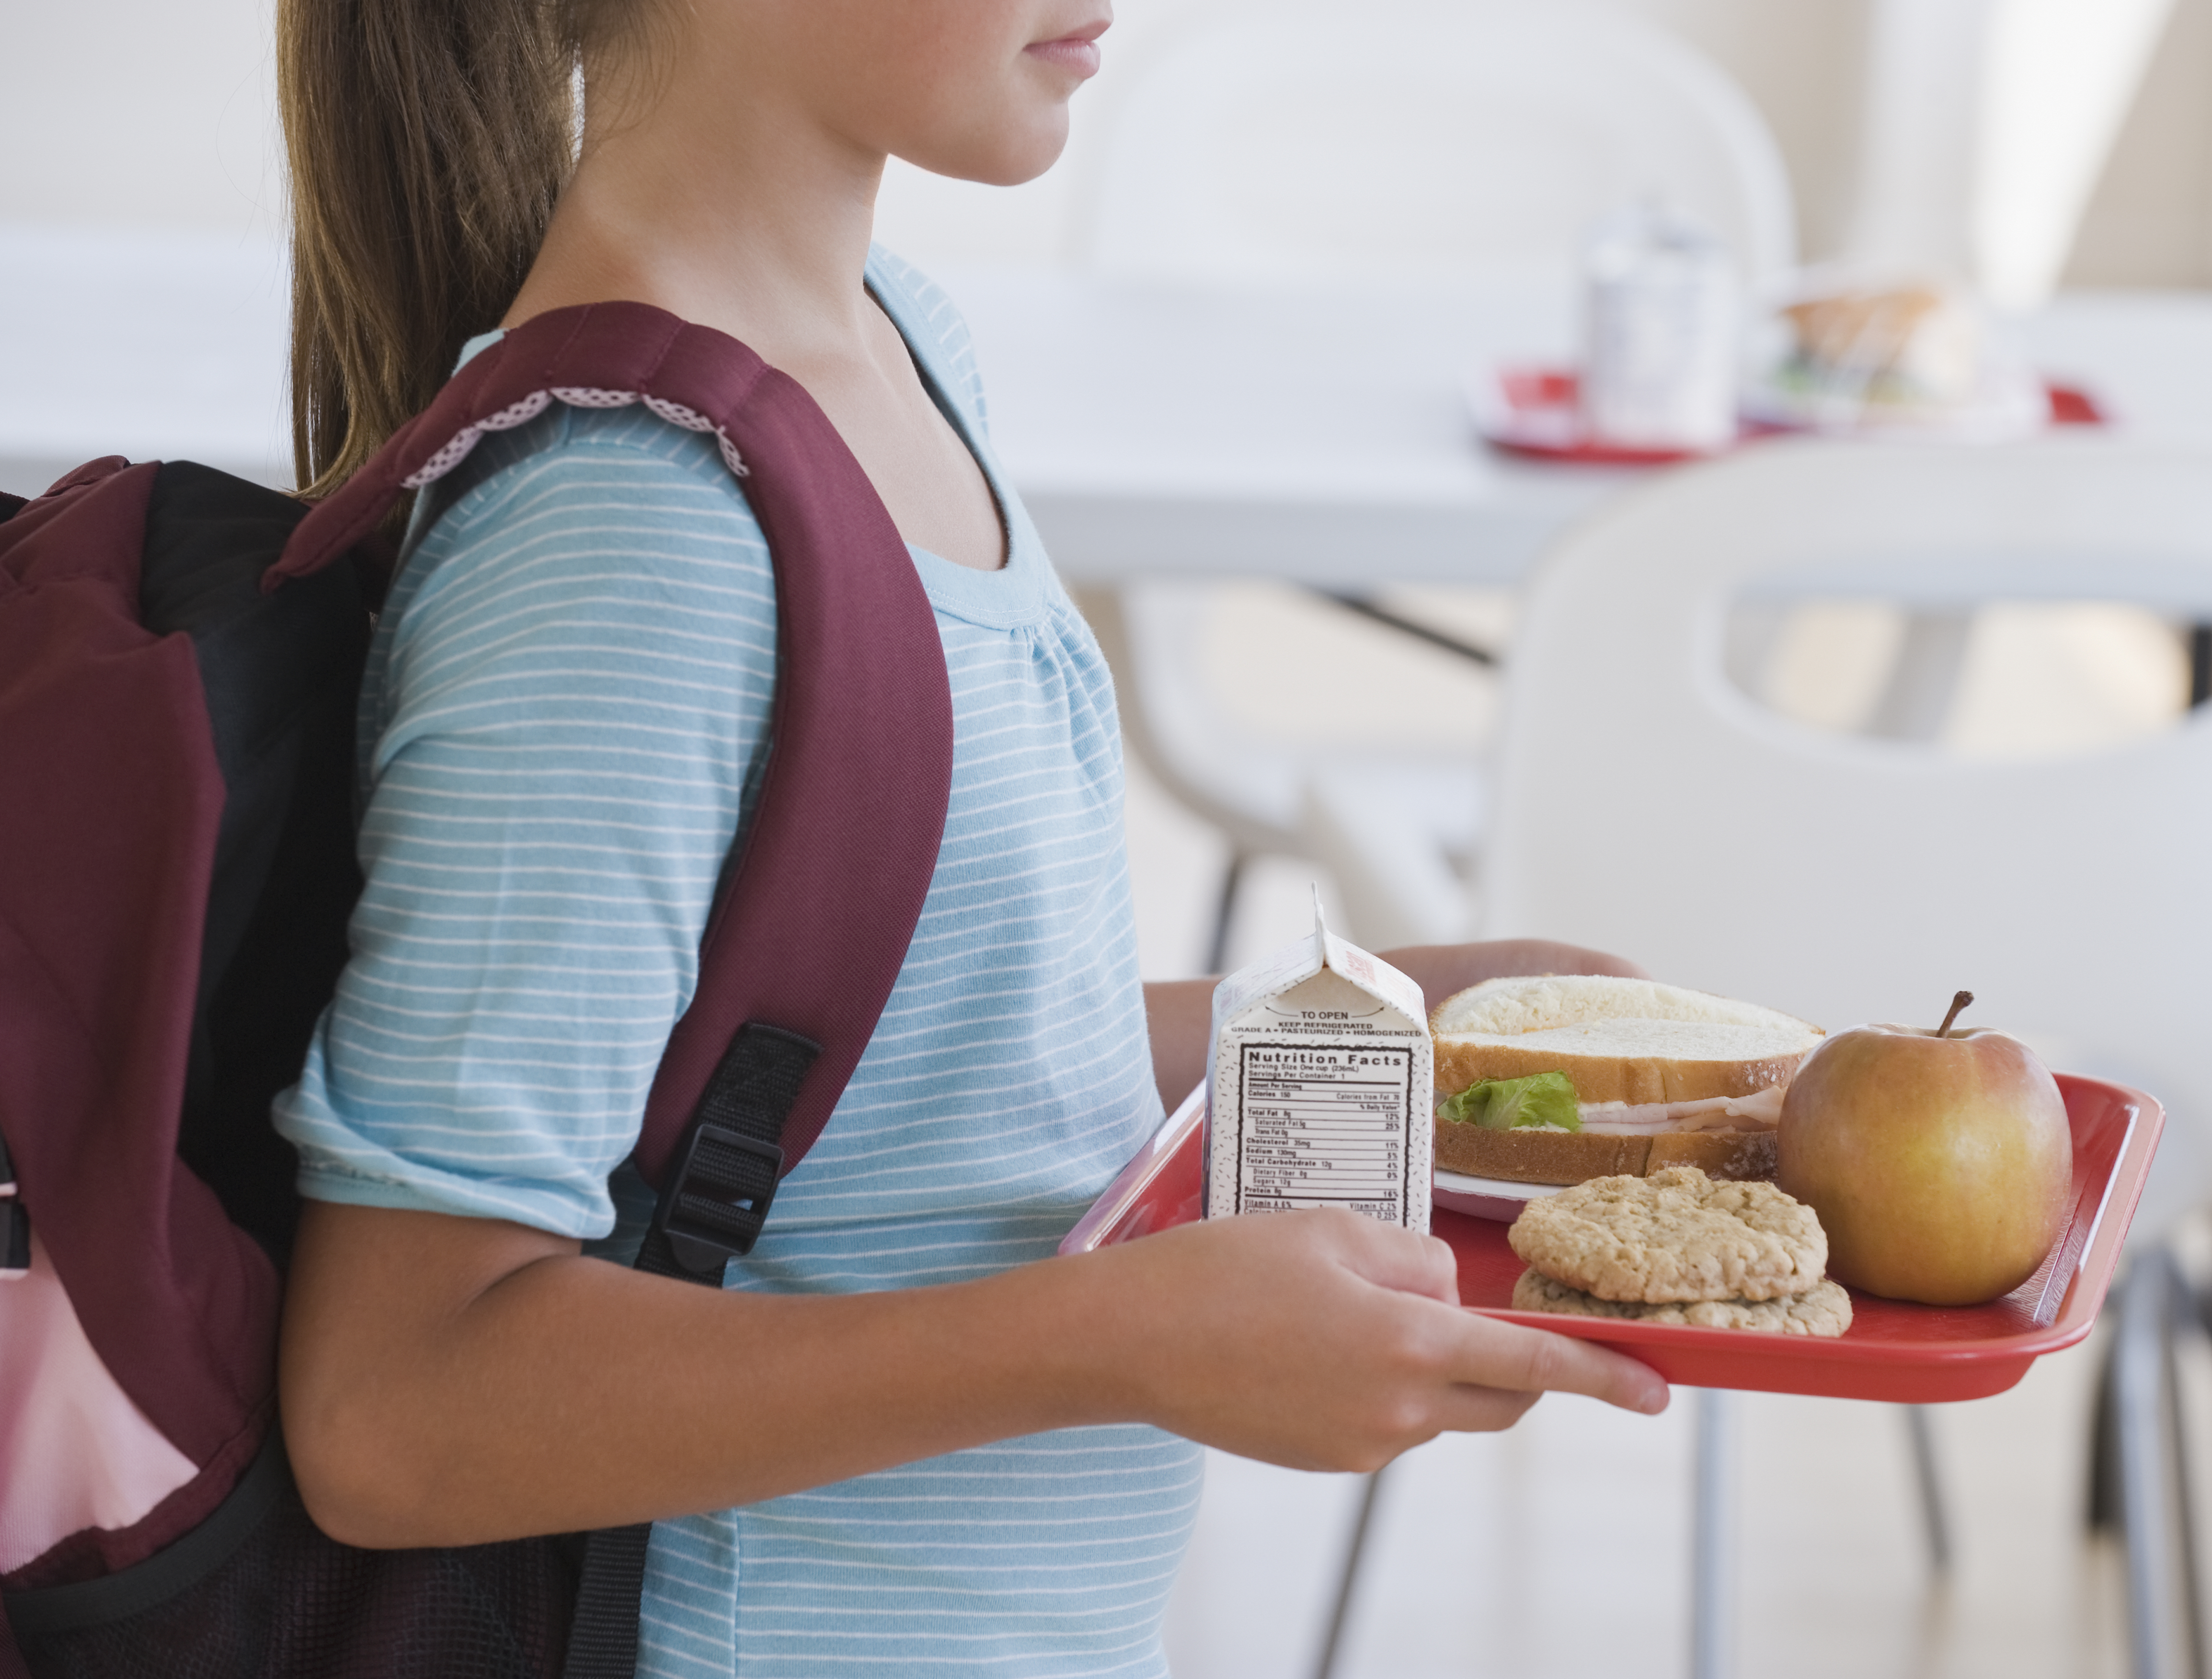 Ottawa receives national school food proposal ahead of federal budget